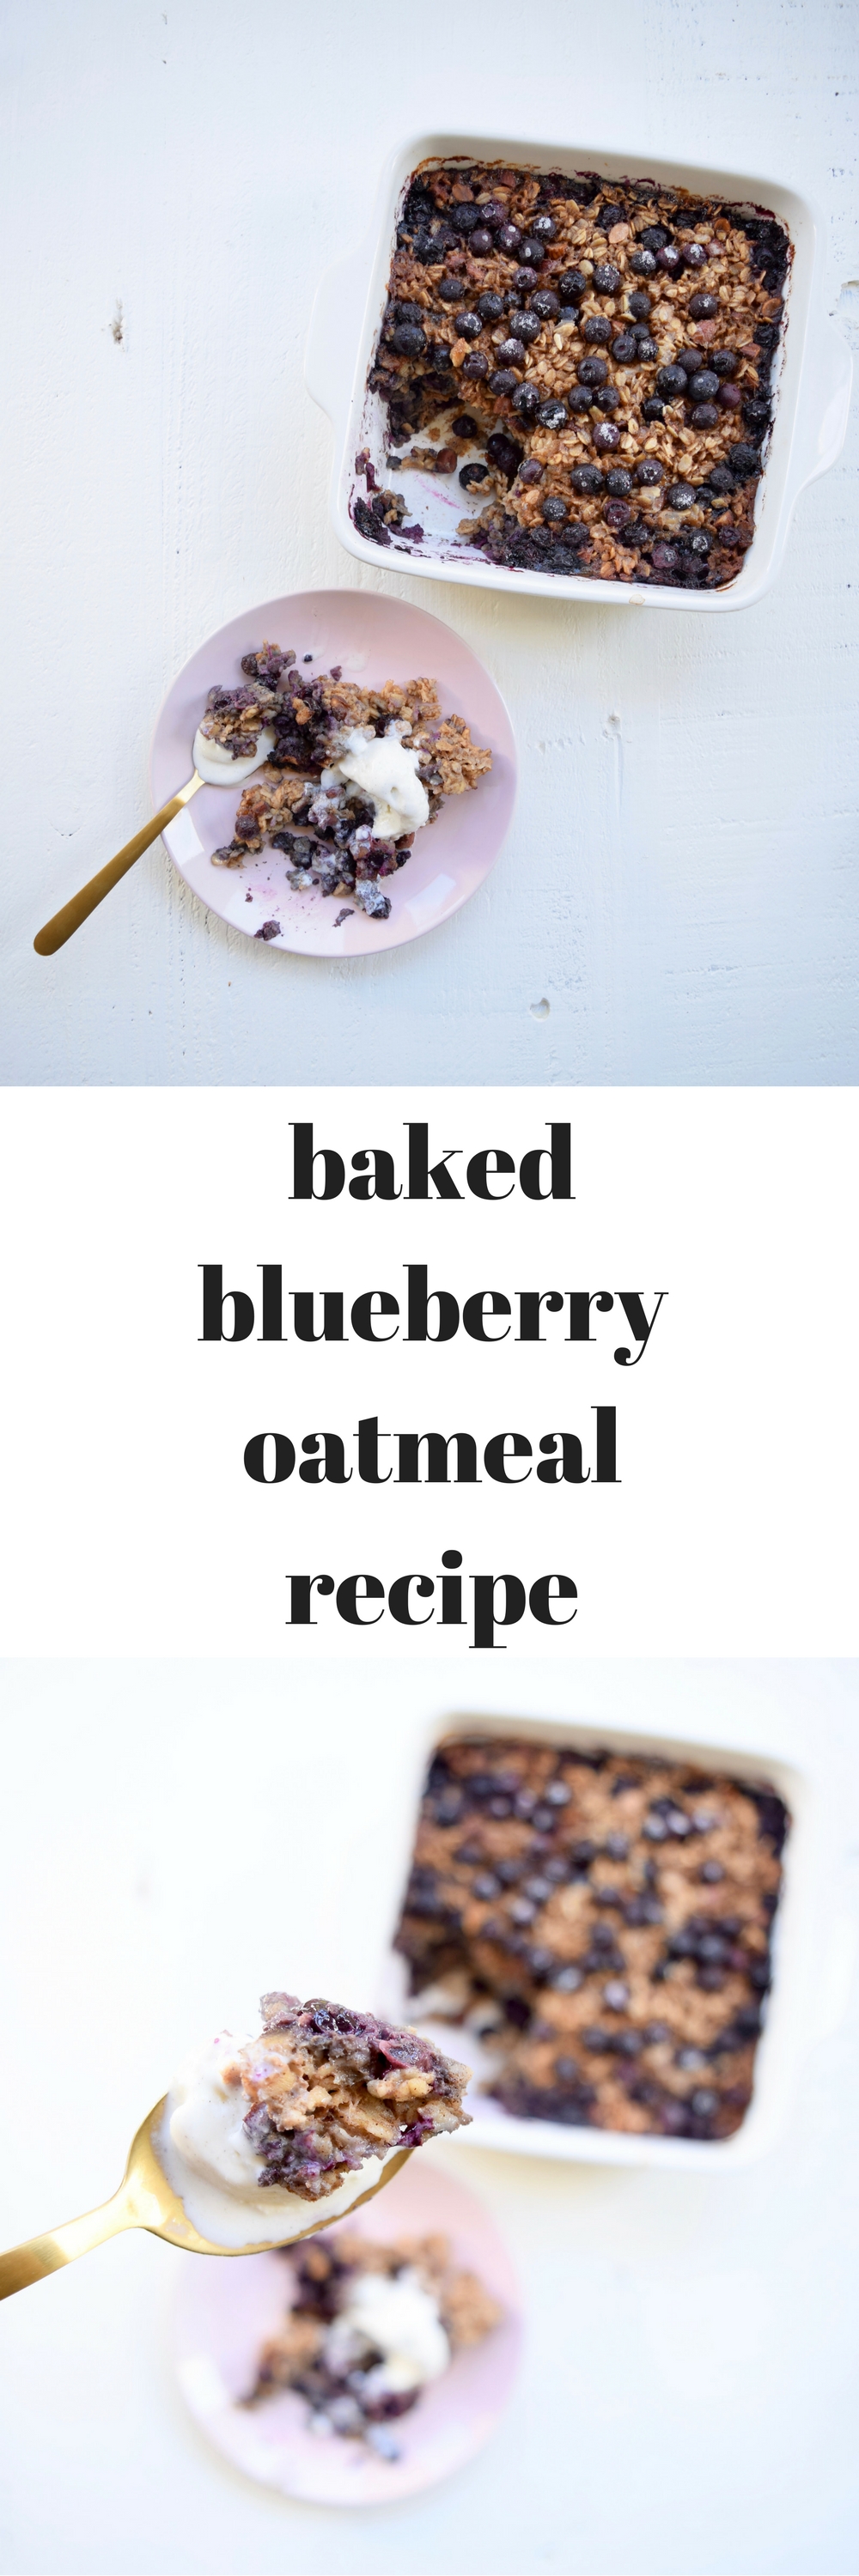 baked blueberry oatmeal recipe